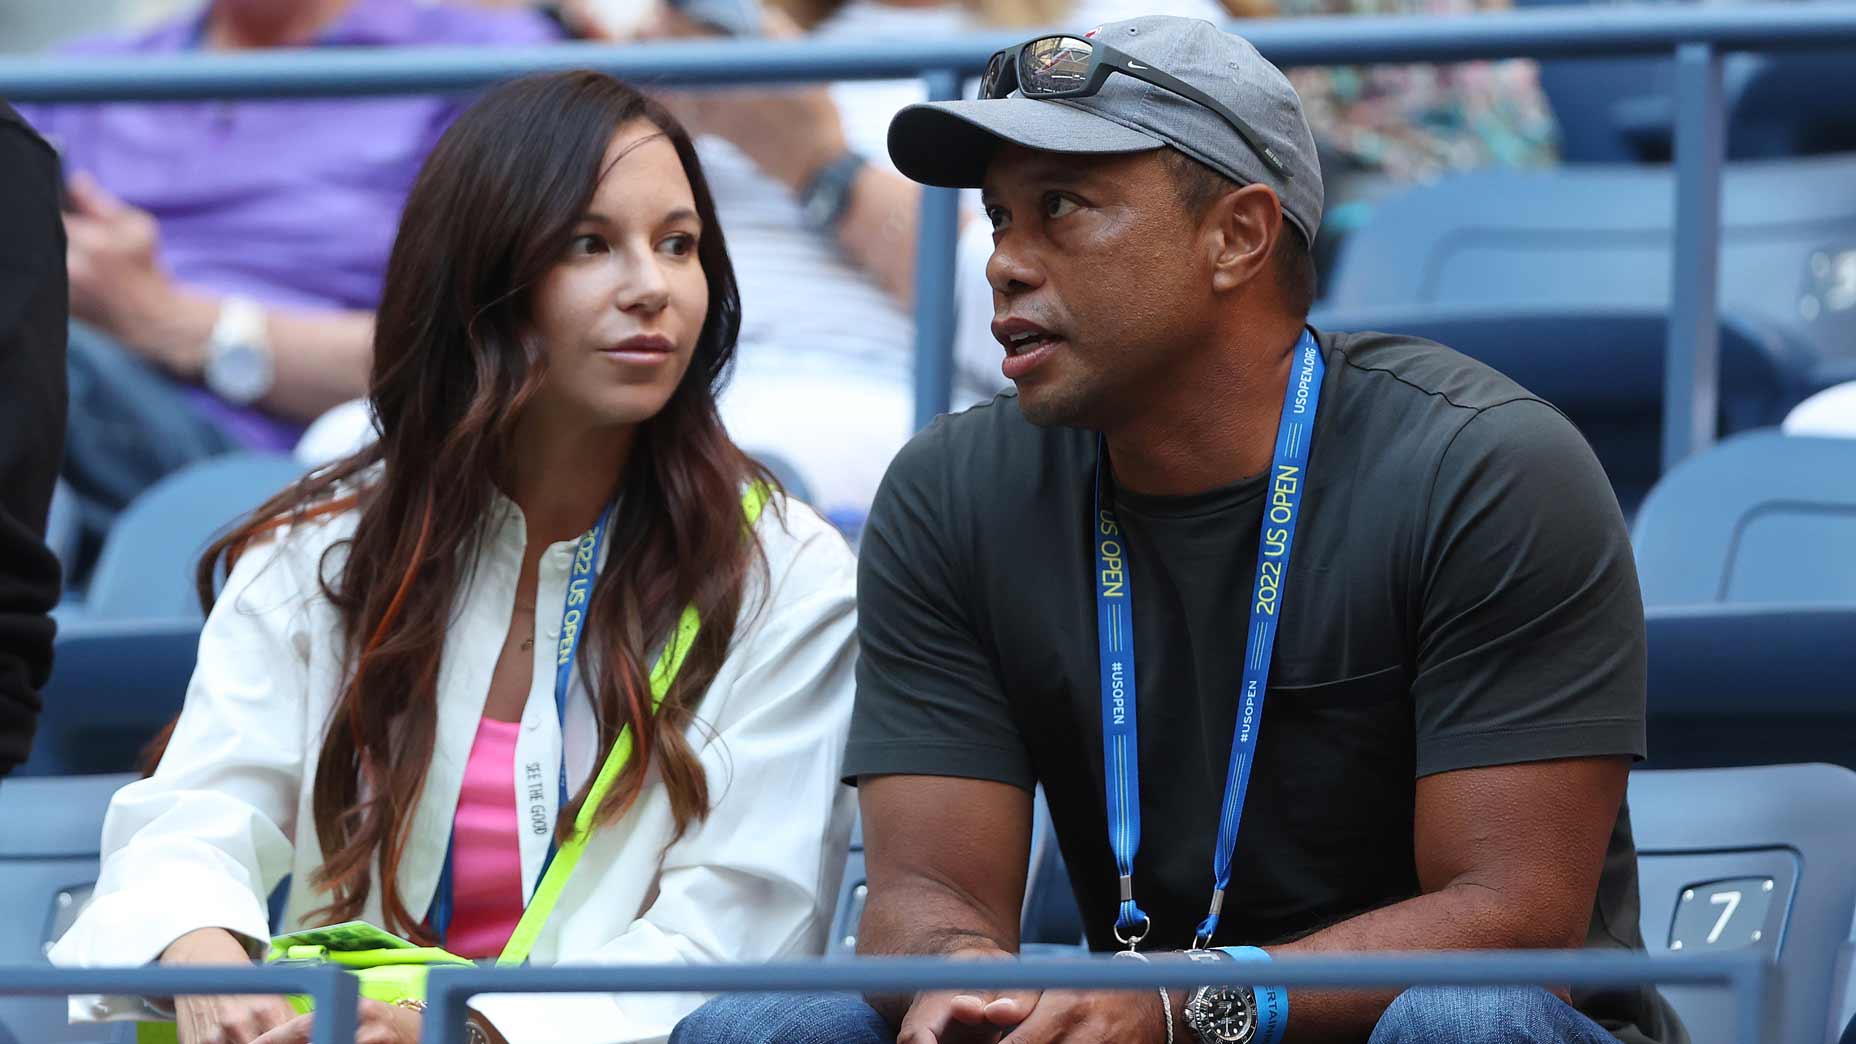 Tiger Woods' exgirlfriend Erica Herman disputes NDA, raises sexual